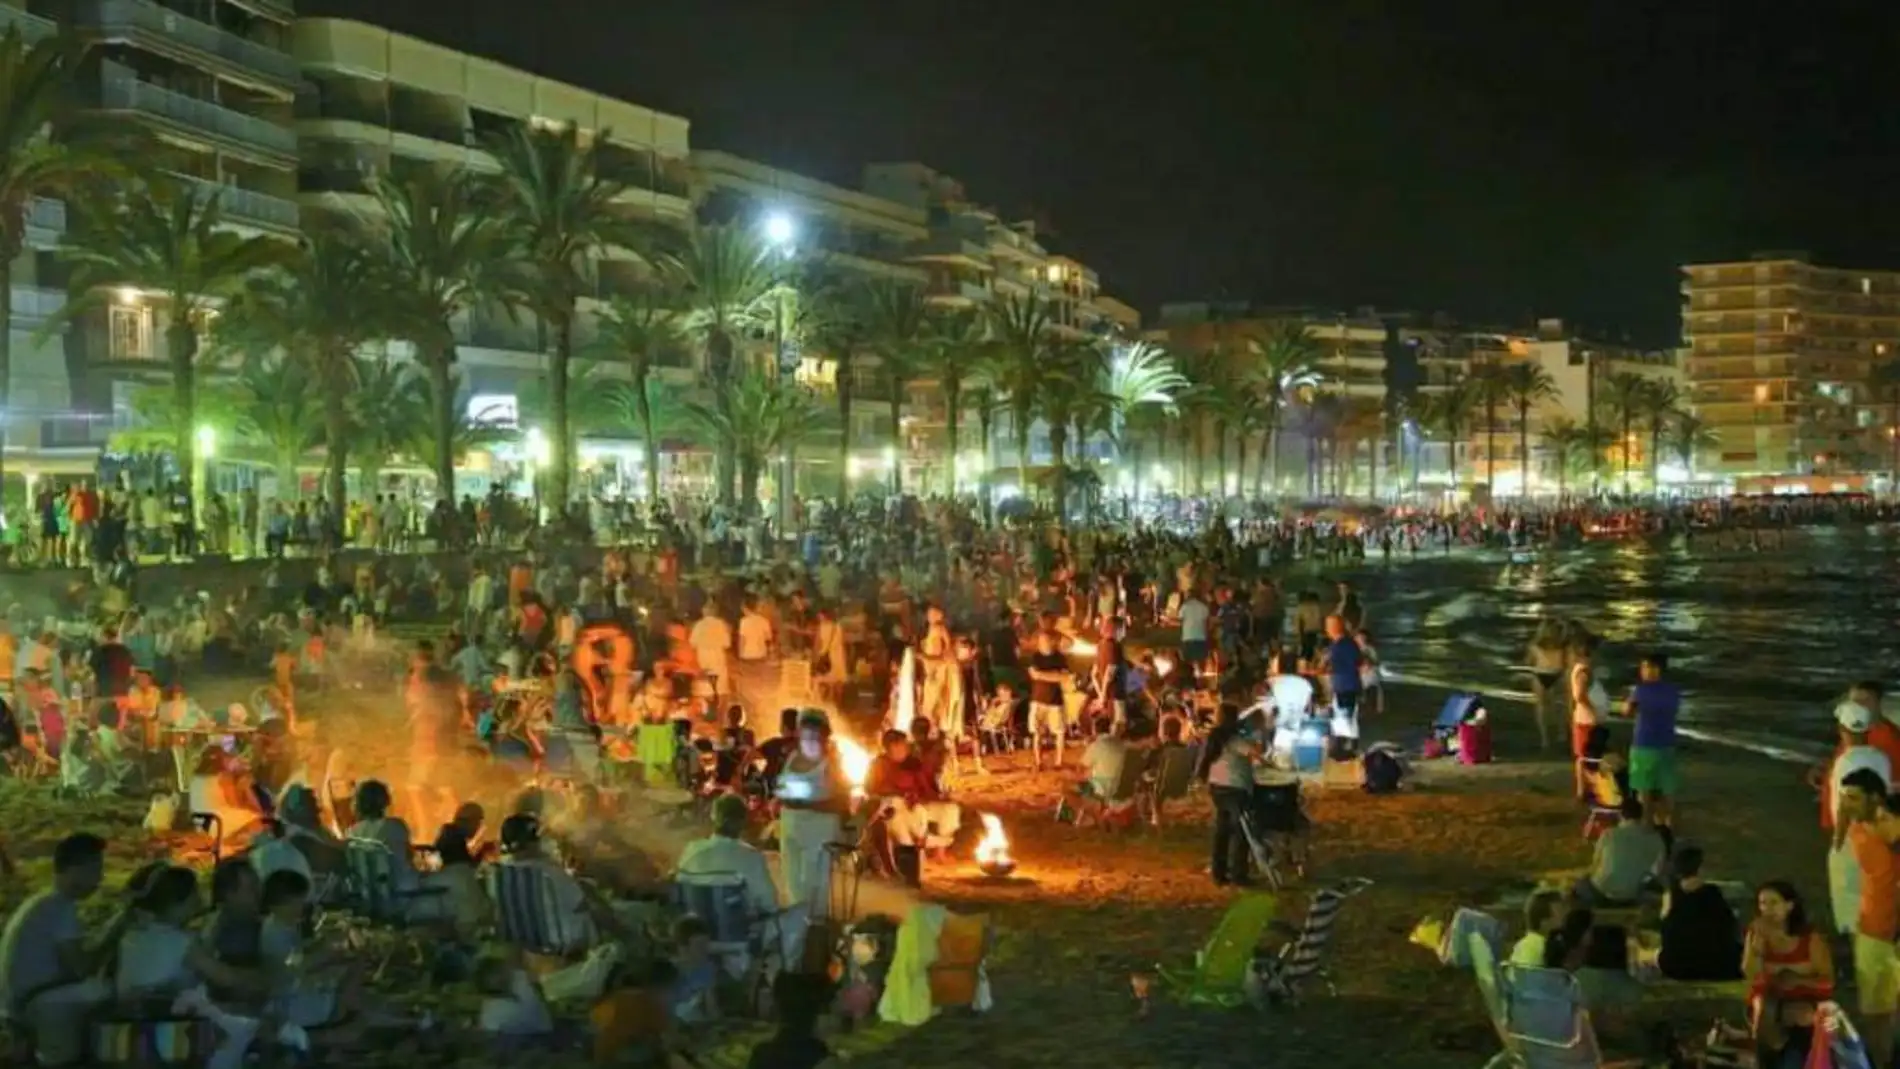 Noche de San Juan en la Vega Baja: así se celebra (o no) en los municipios costeros de la Vega Baja 